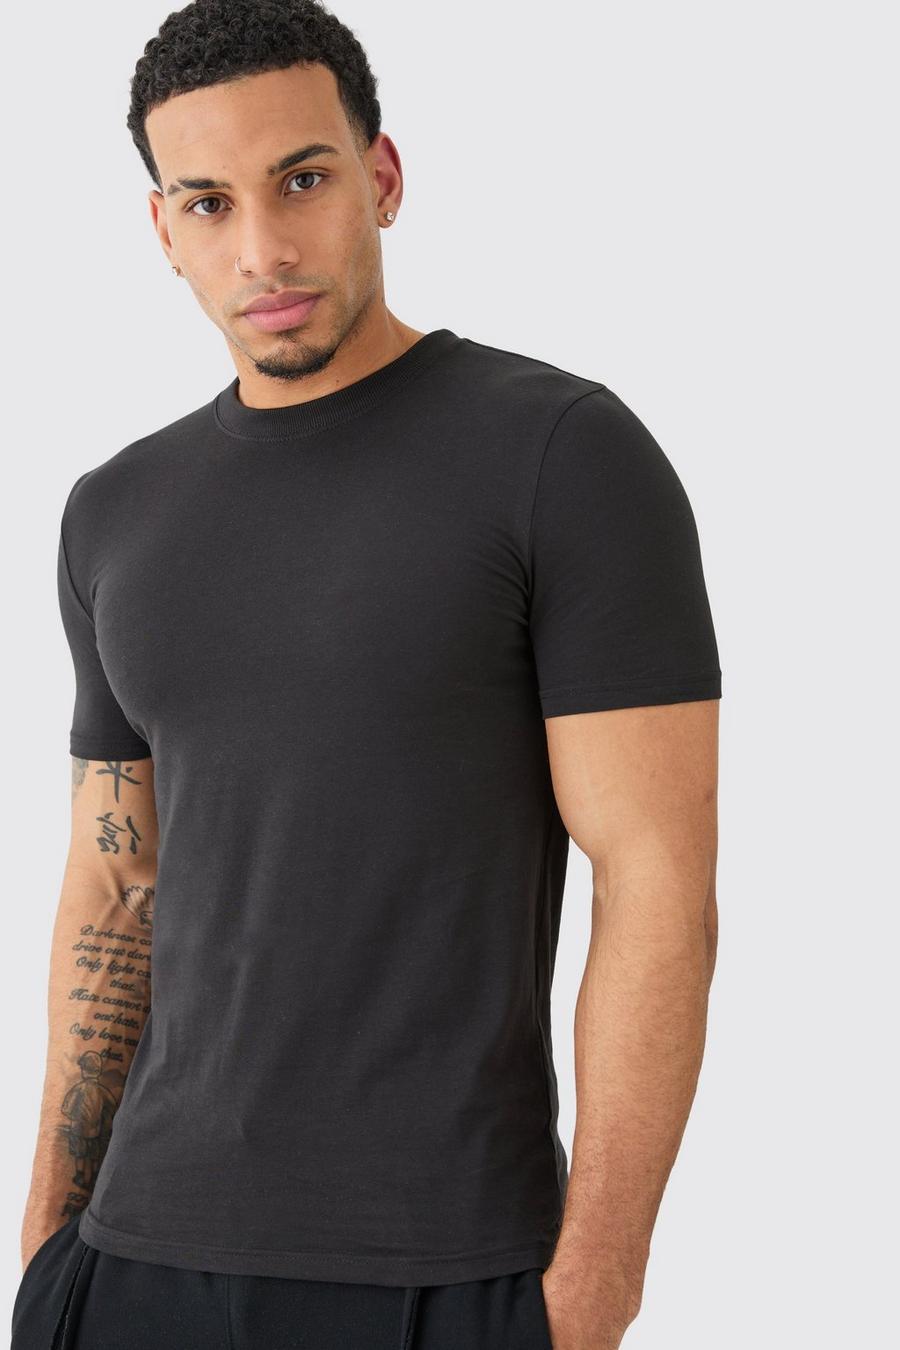 Black Muscle Fit T-shirt